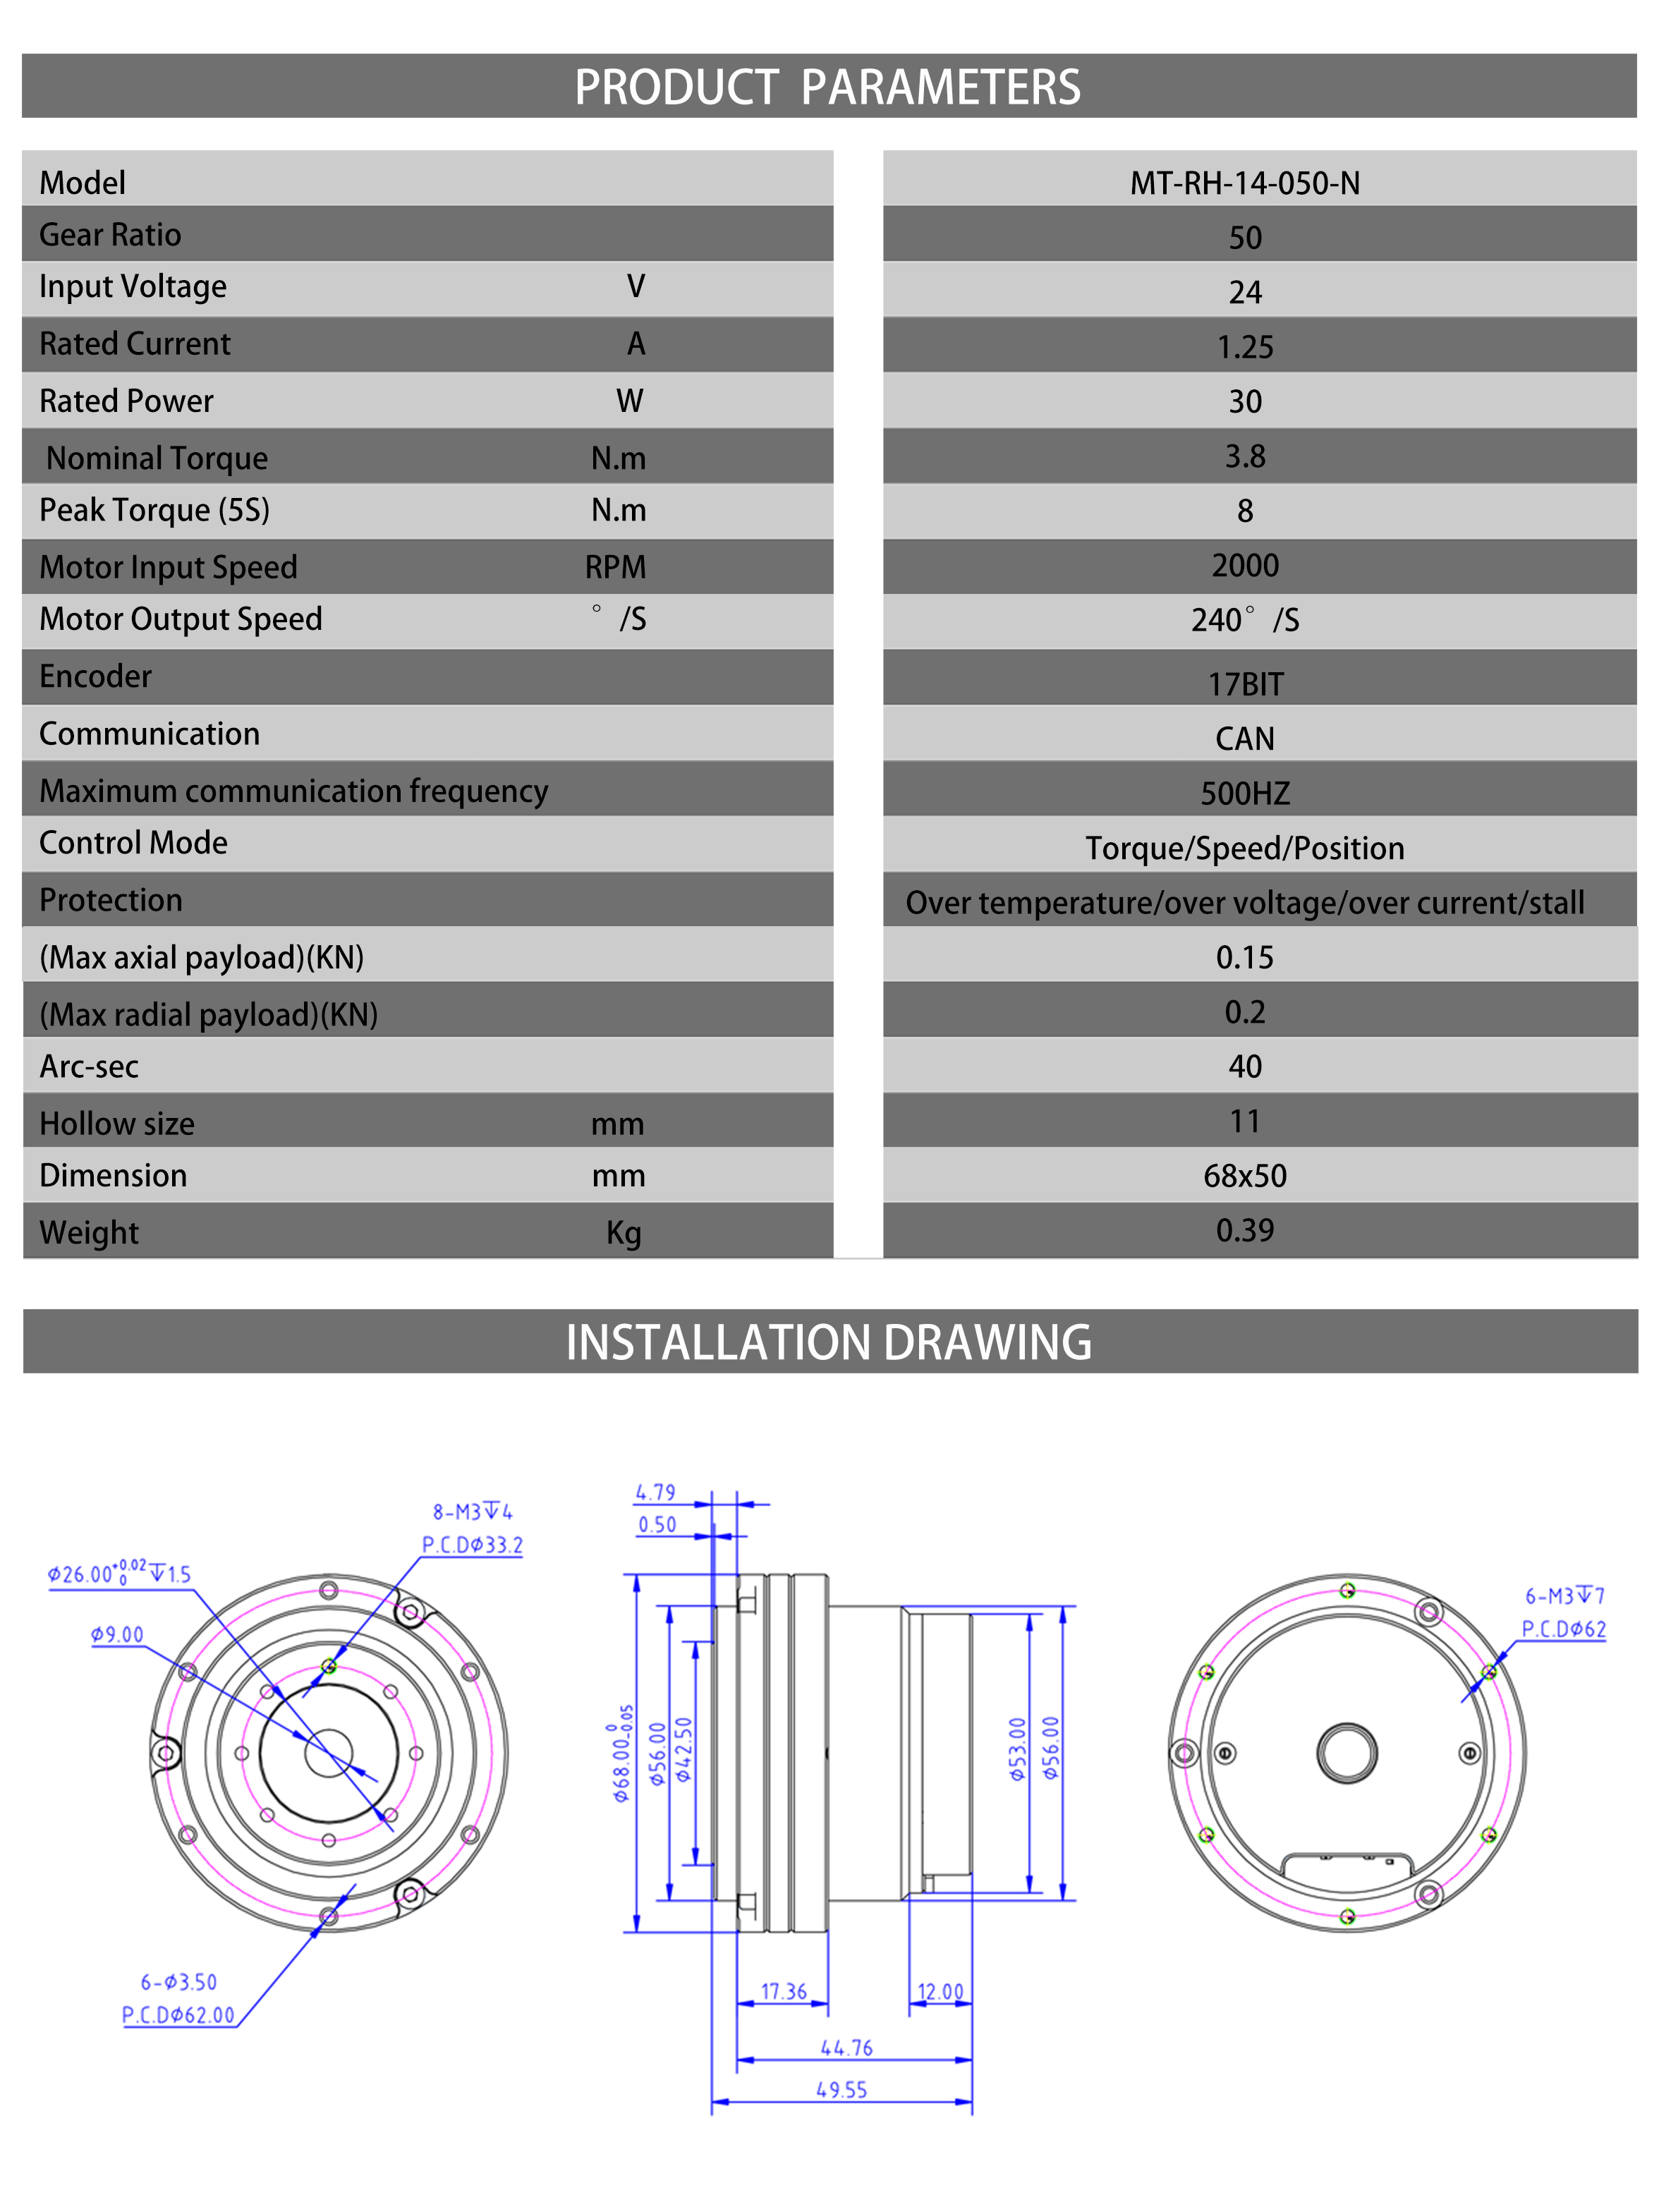 MT-RH-14-050-N Series Hollow shaft motor Harmonic drive reducer 100 to 1 actuator